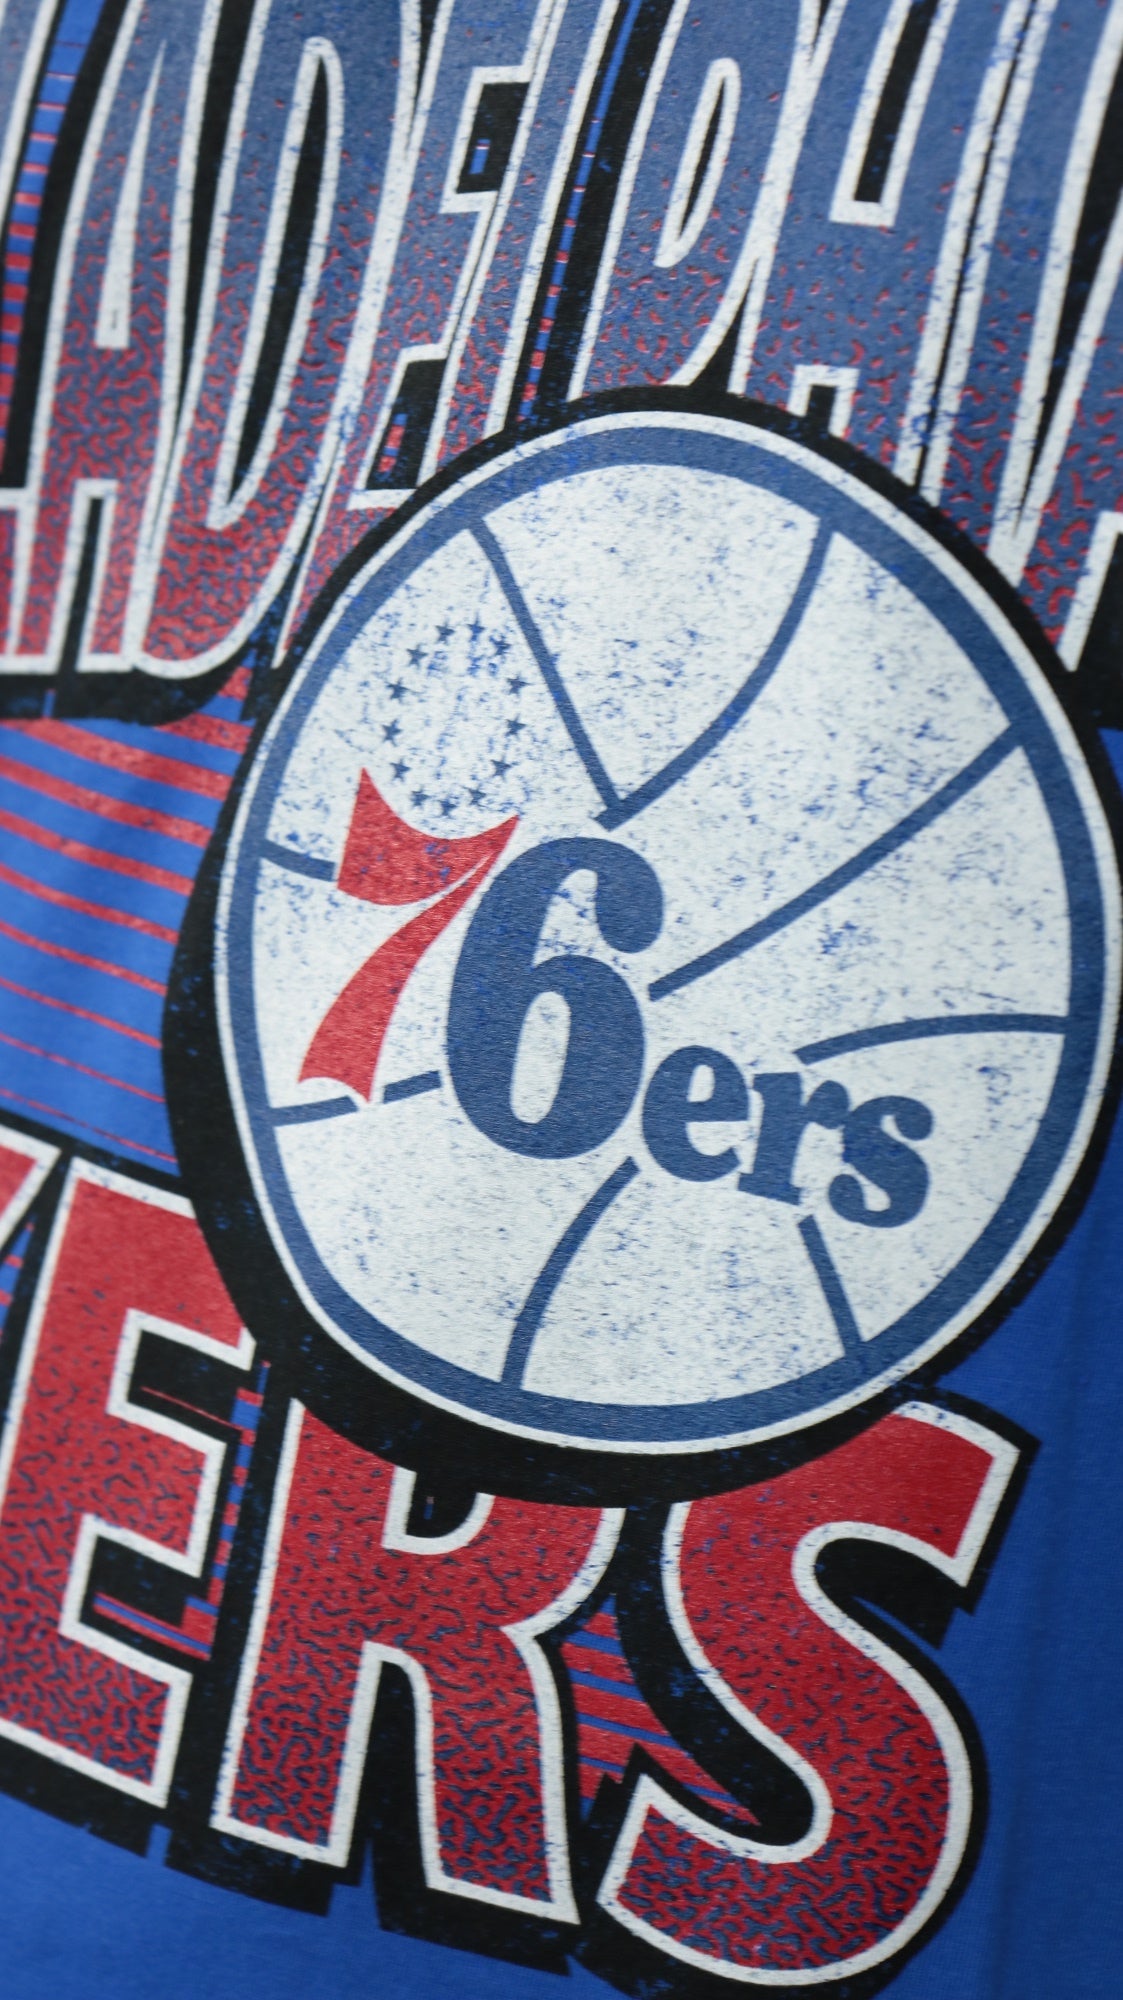 76ers logo on the Philadelphia 76ers NBA Hardwood Classics Incline Stacked Tee | Royal Blue T-shirt